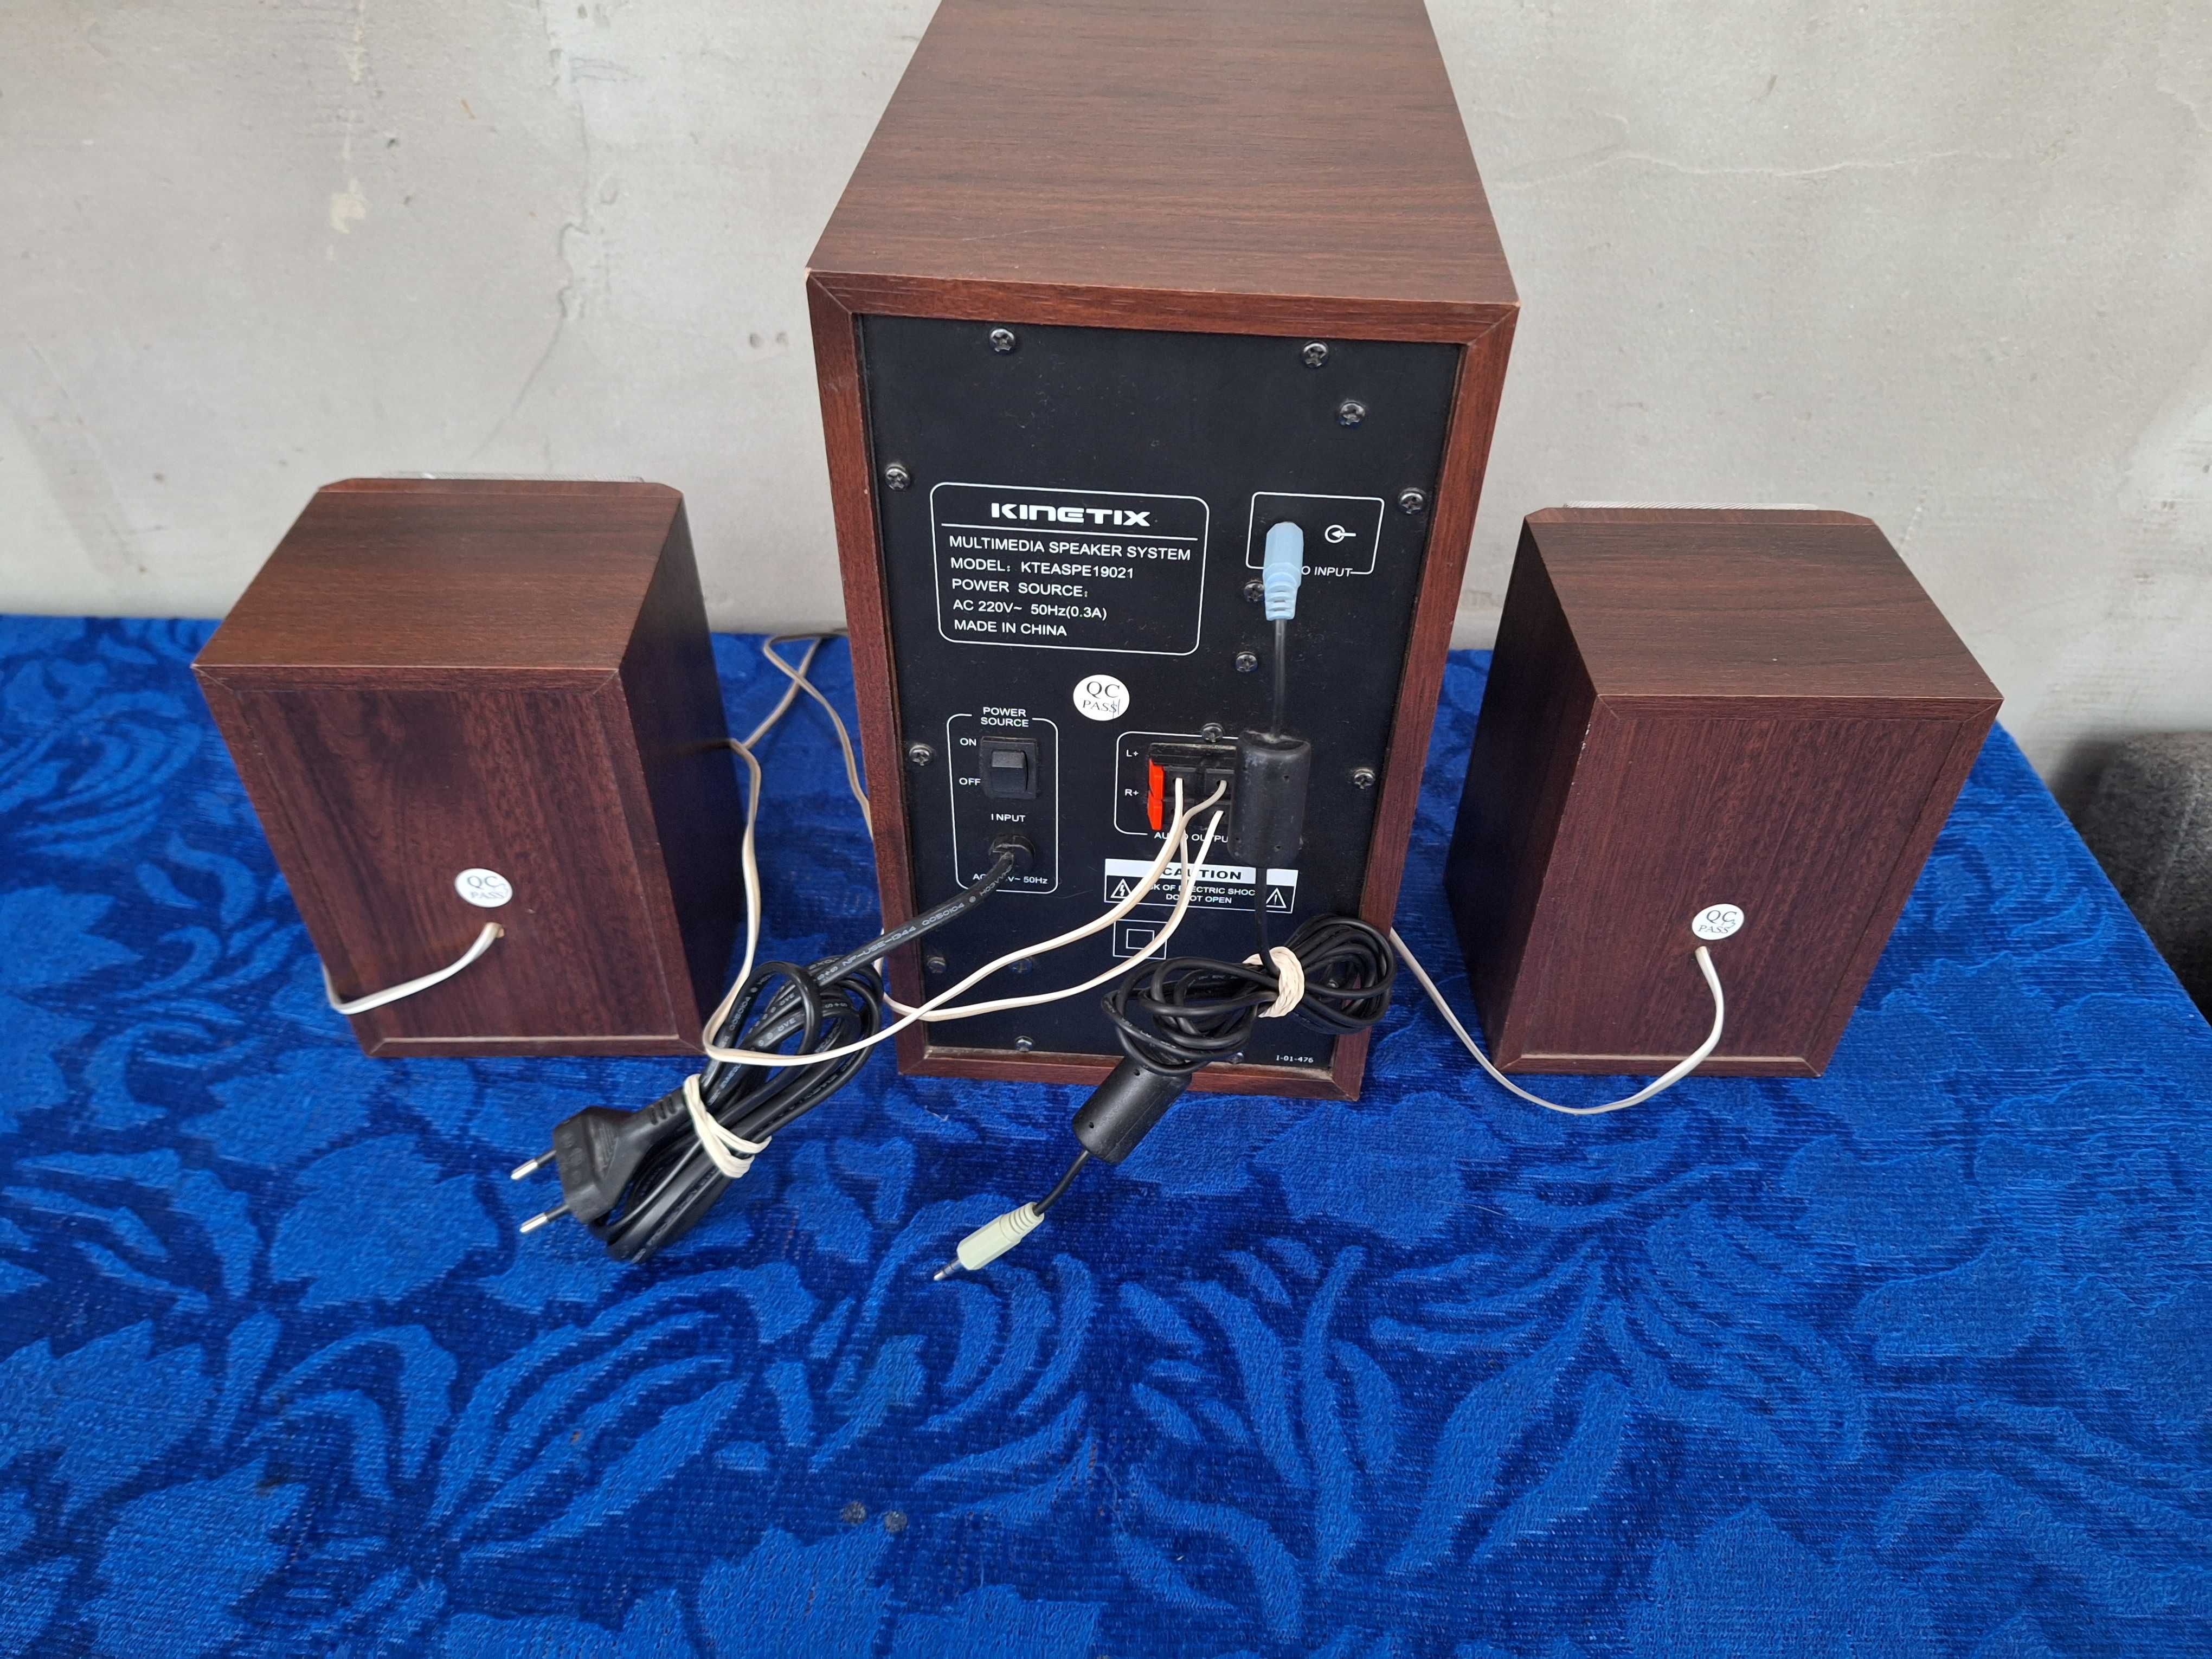 Boxe PC, TV, Kinetix 2.1 | 28W | Multimedia Speaker System